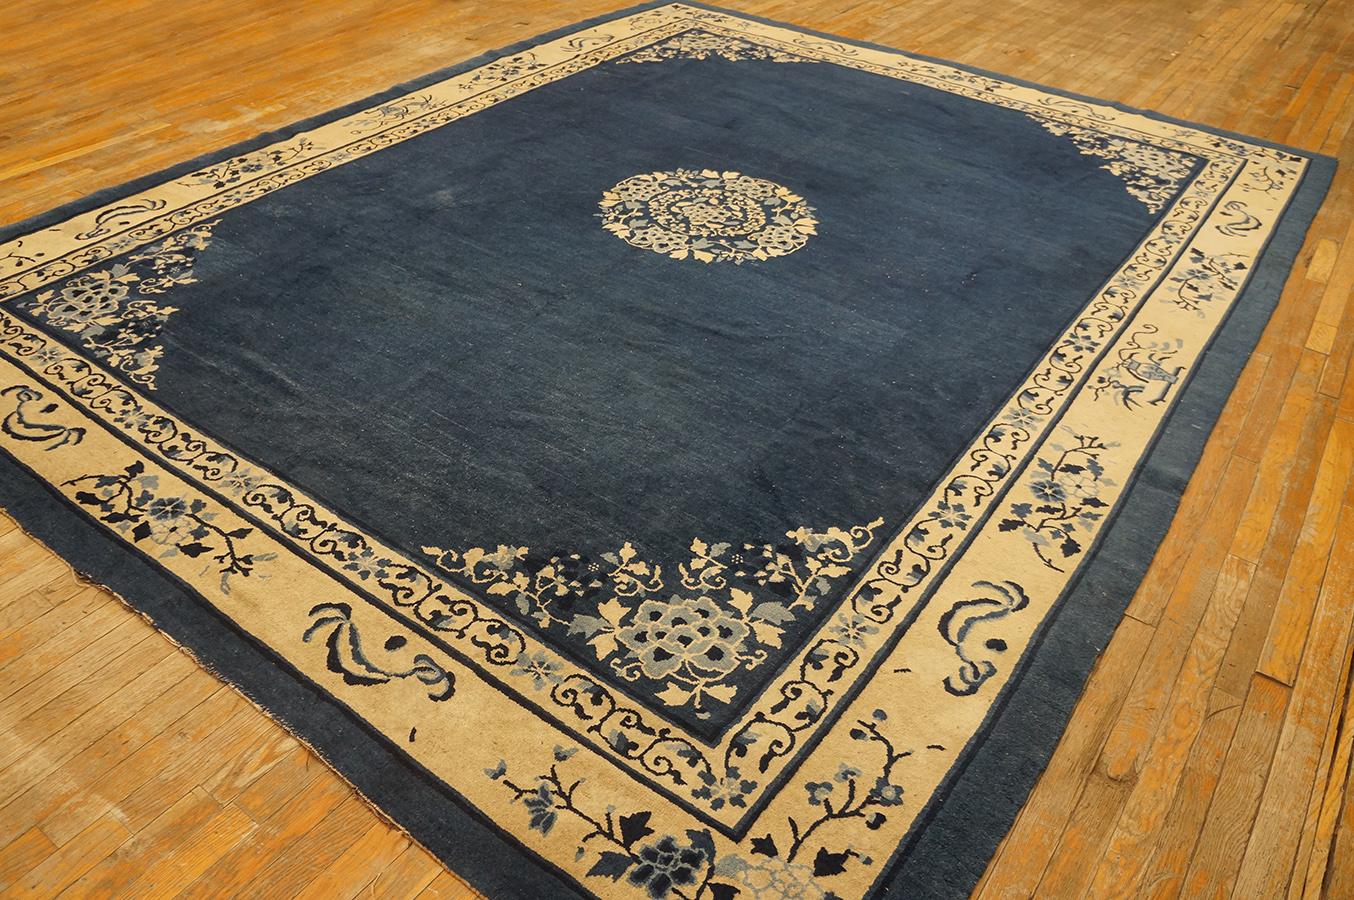 Antique Chinese Peking rug. Measures: 9' 2'' x11' 8''.